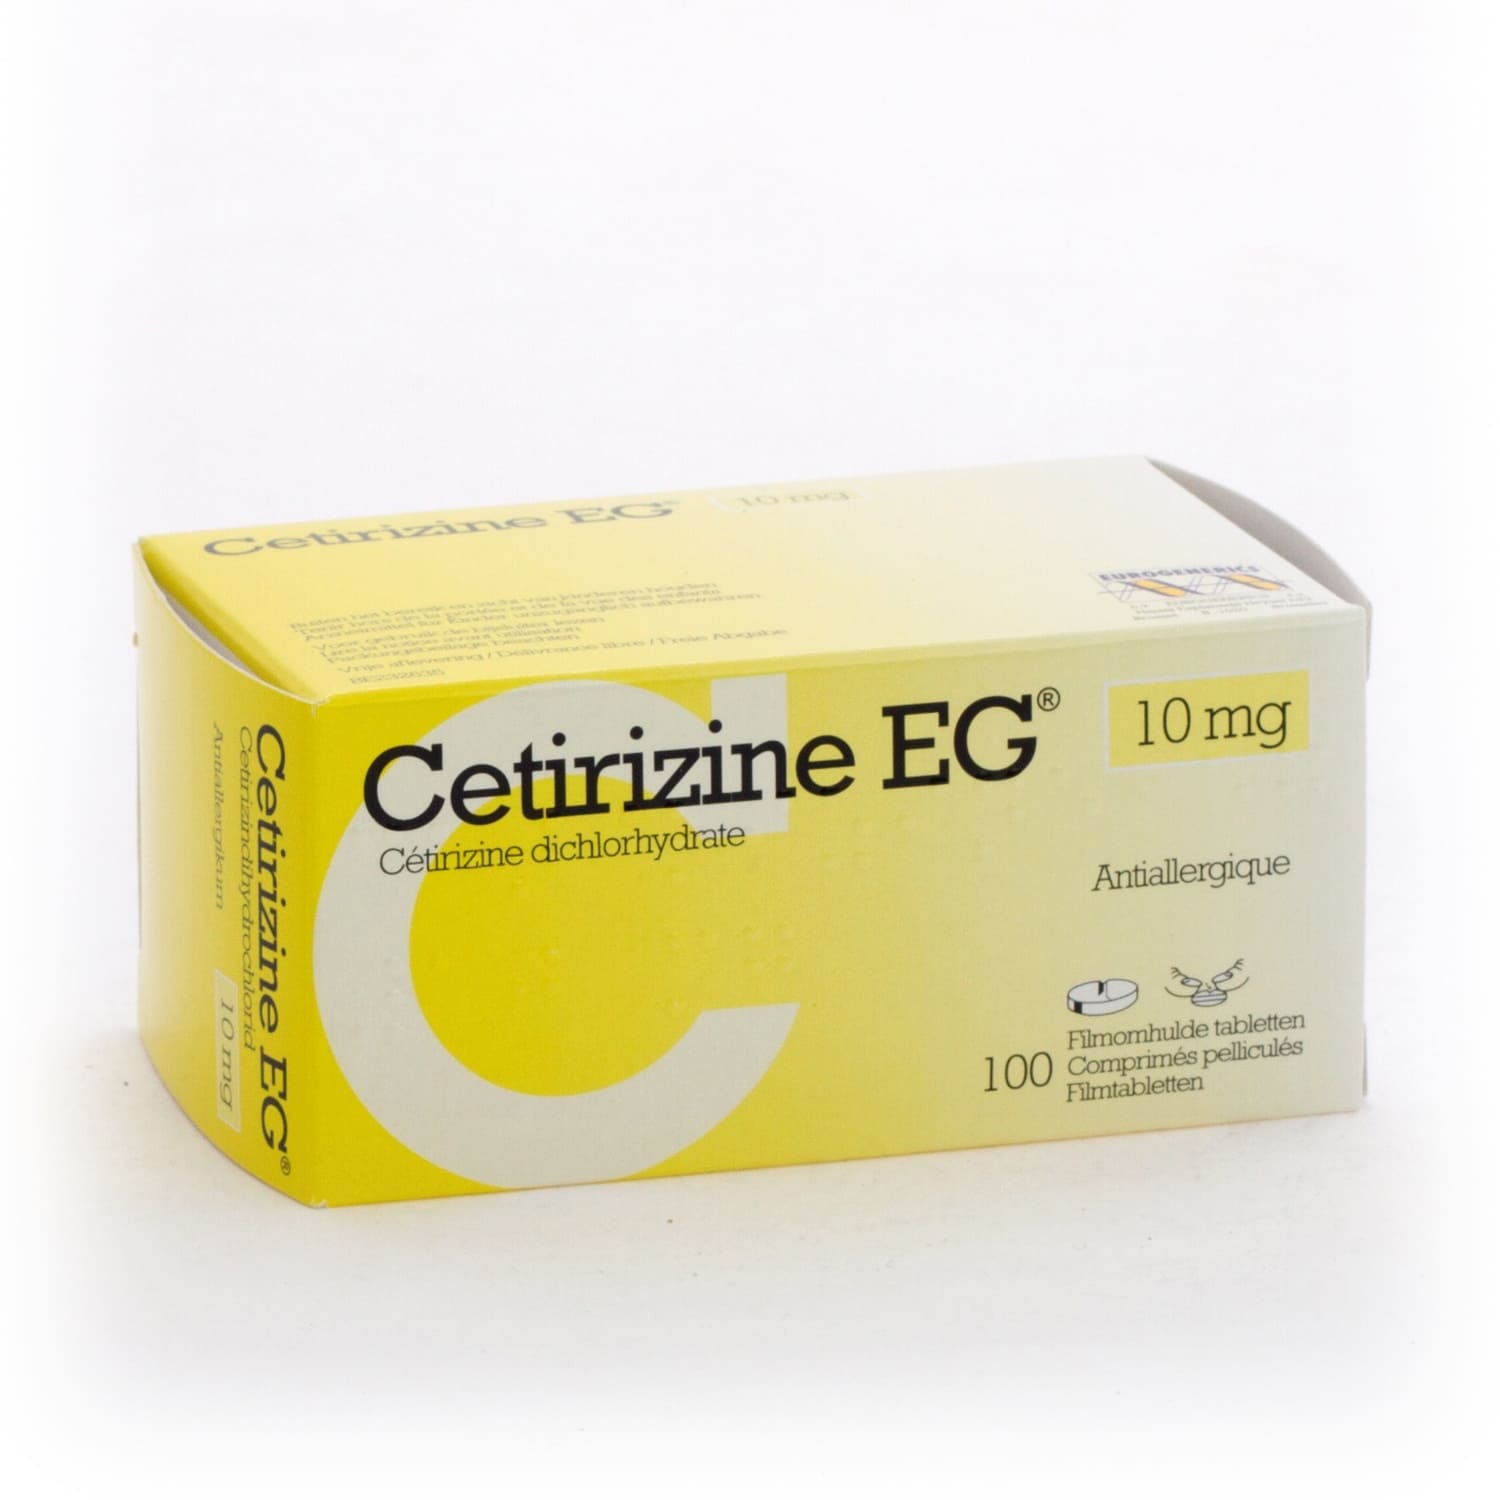 Cetirizine EG 10 mg